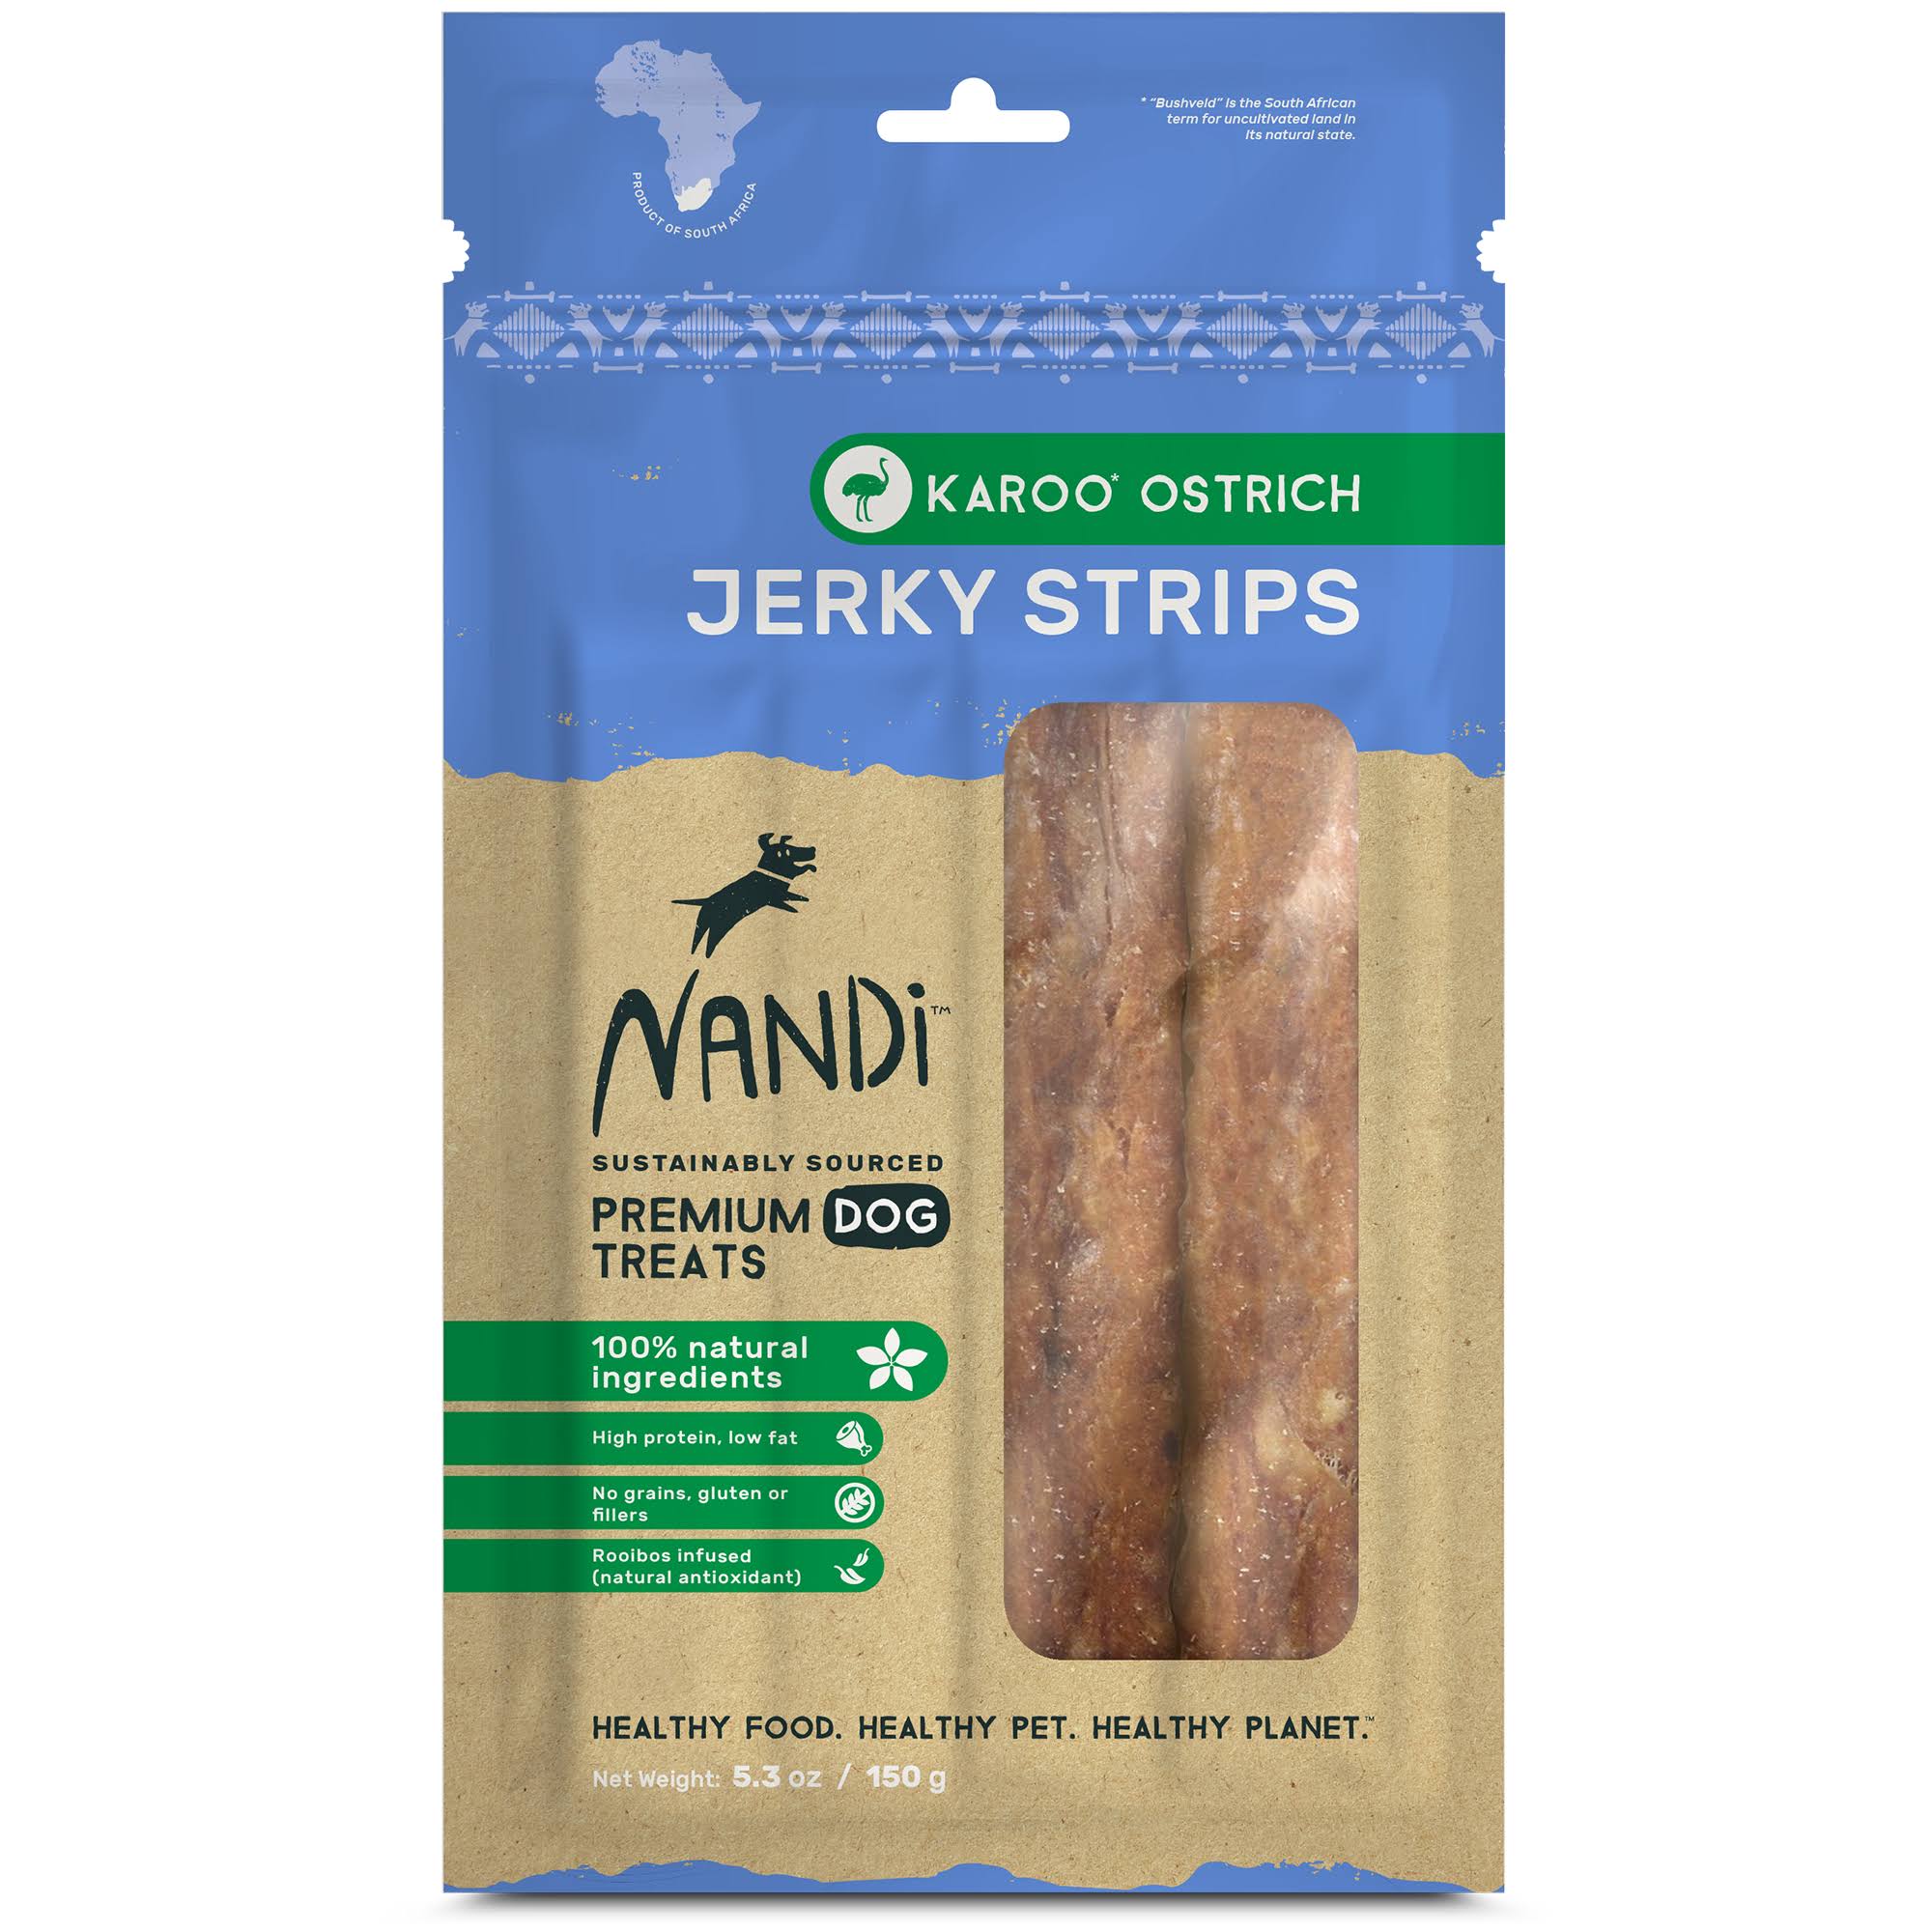 Nandi Jerky Strips Dog Treats - Karoo Ostrich, 150g